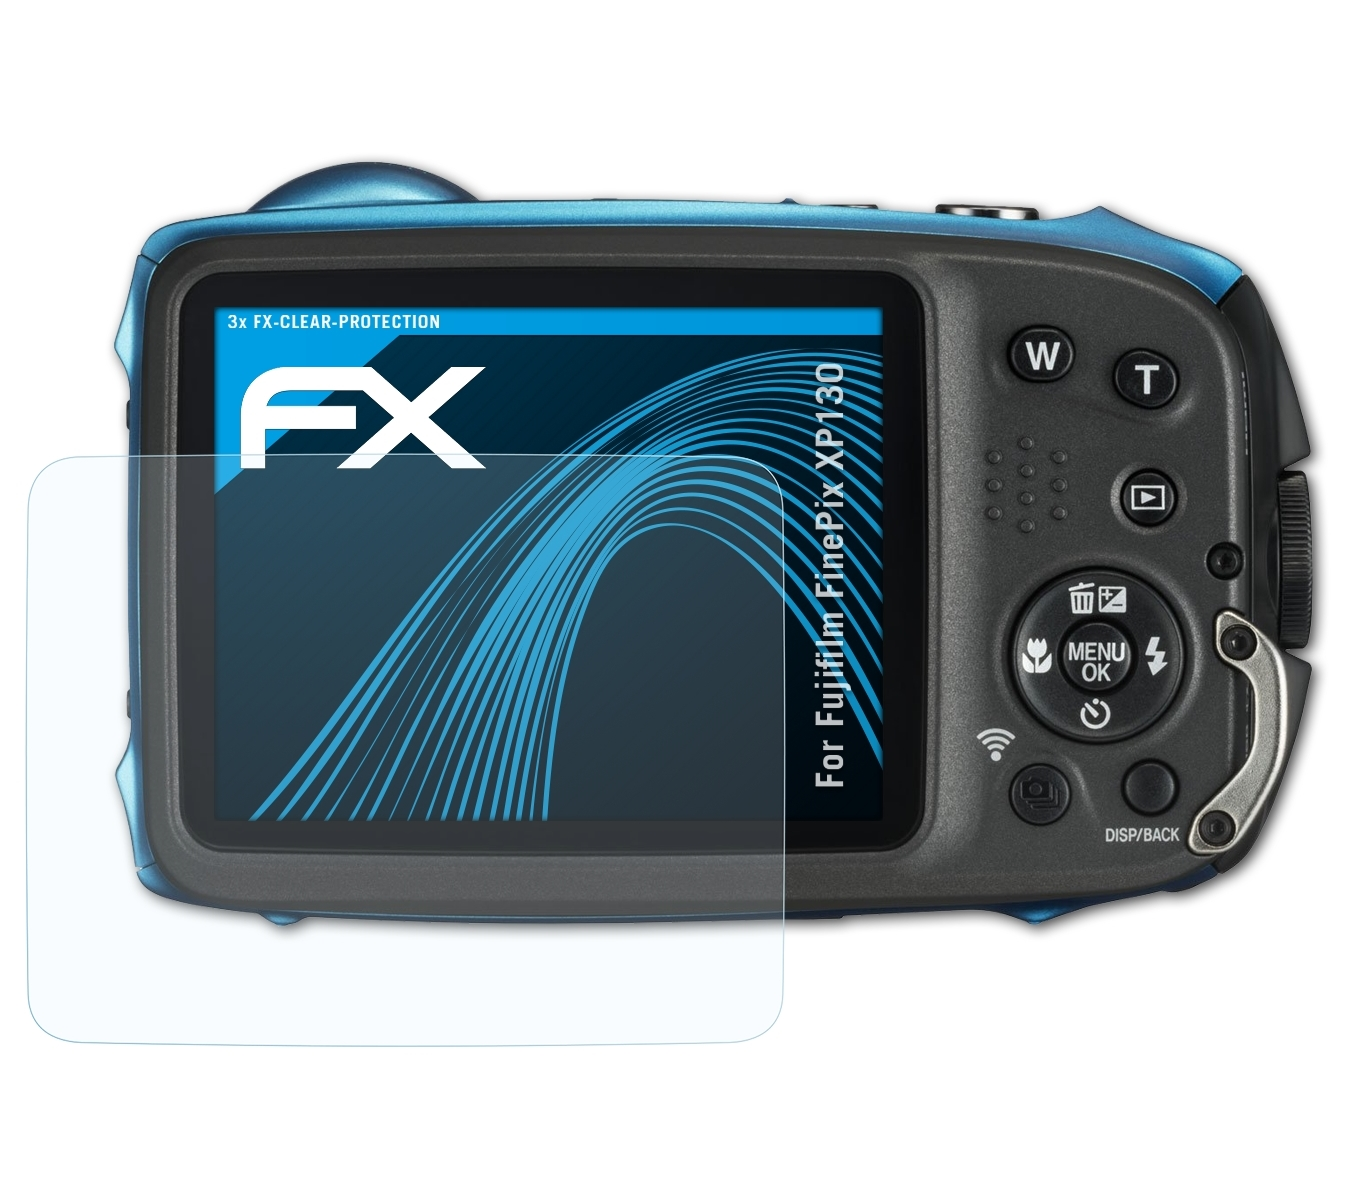 ATFOLIX 3x FX-Clear Displayschutz(für XP130) FinePix Fujifilm